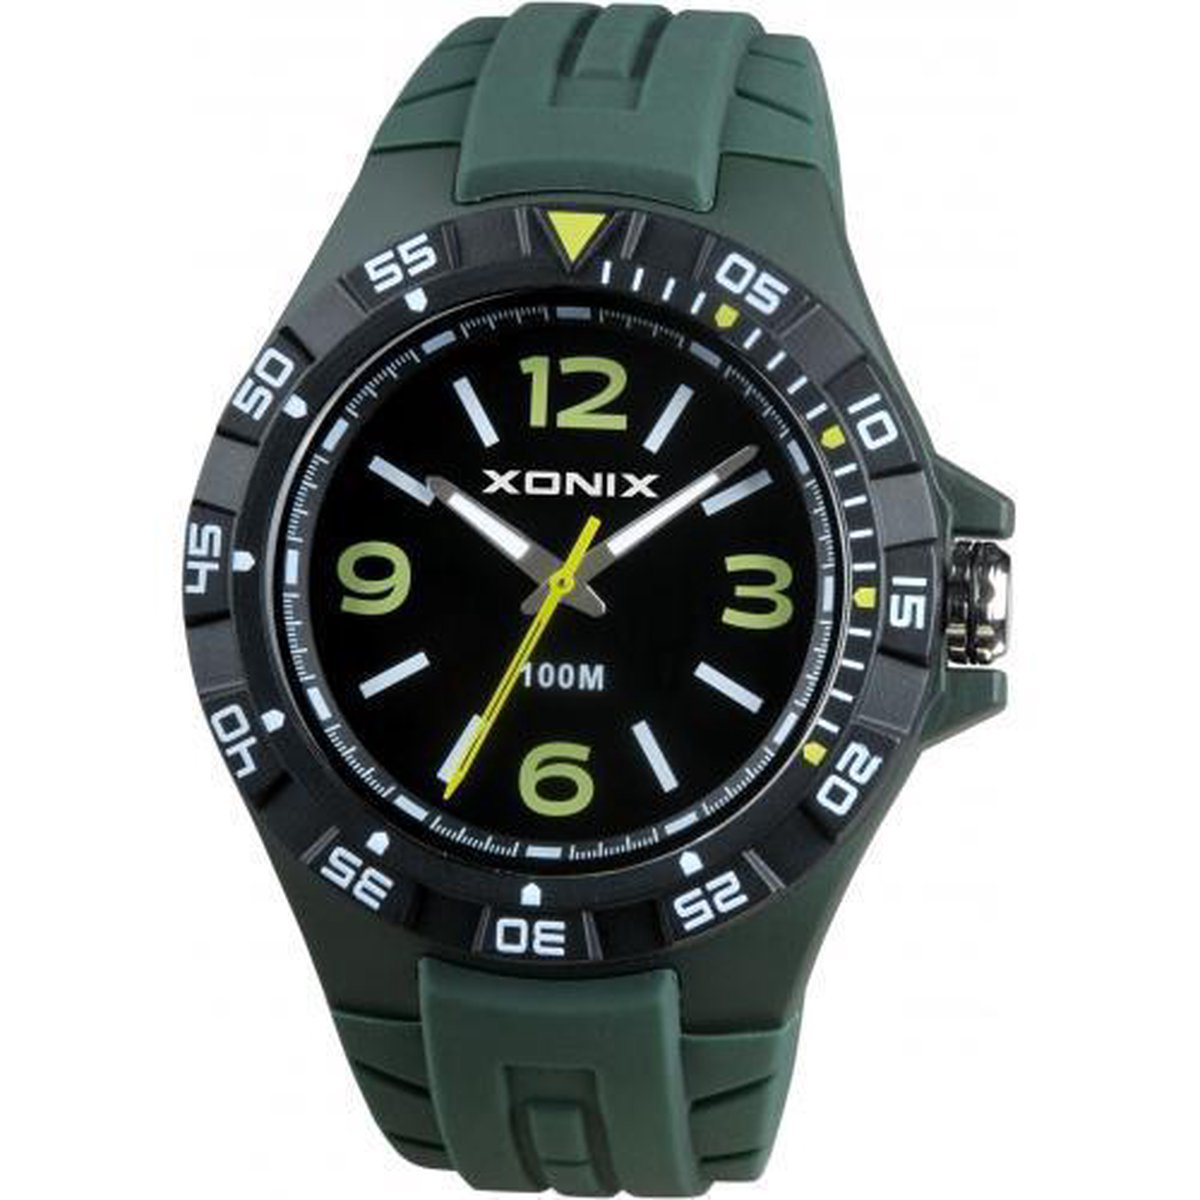 Groen Xonix horloge waterdicht CAD-004